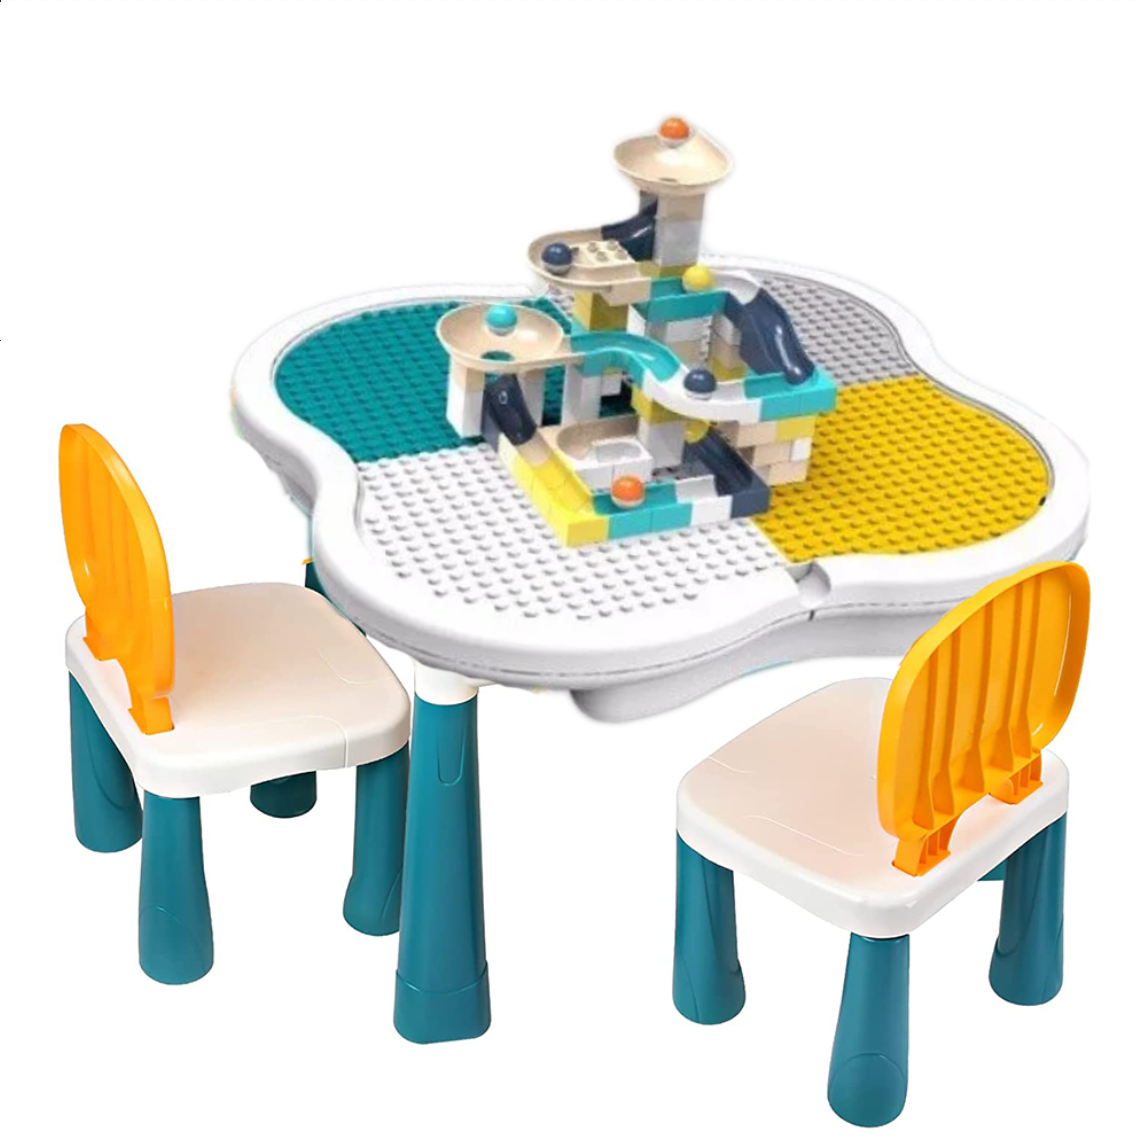 Masa interactiva tip lego pentru copii, cu 2 scaune + cuburi de asamblare, masuta activitati